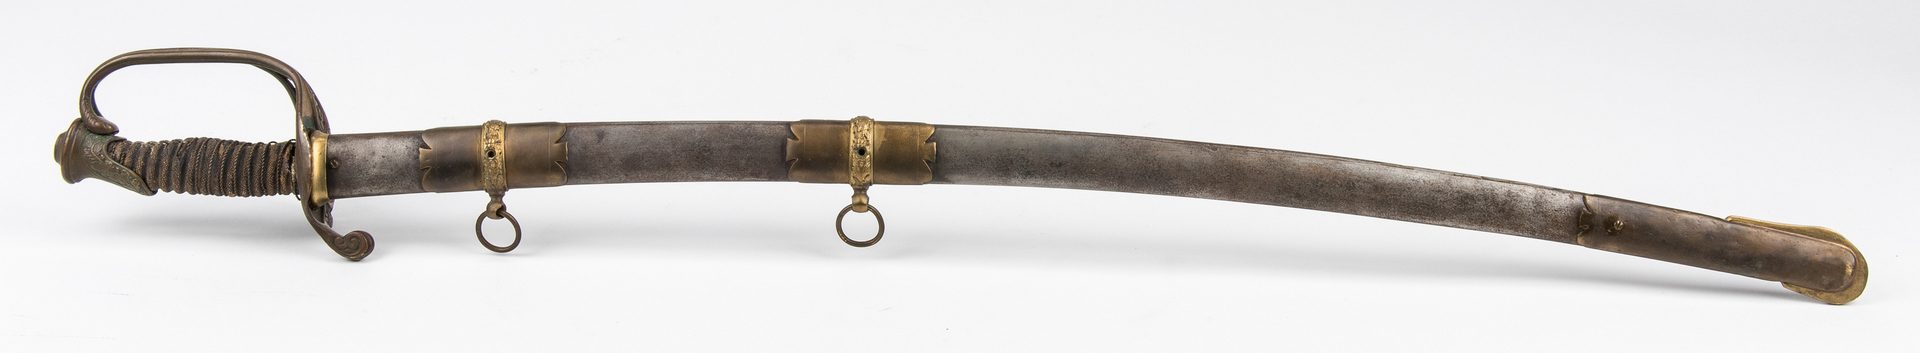 Lot 334: 1862 Presentation Clauberg Model 1840 Sword, Lieut. G. H. North